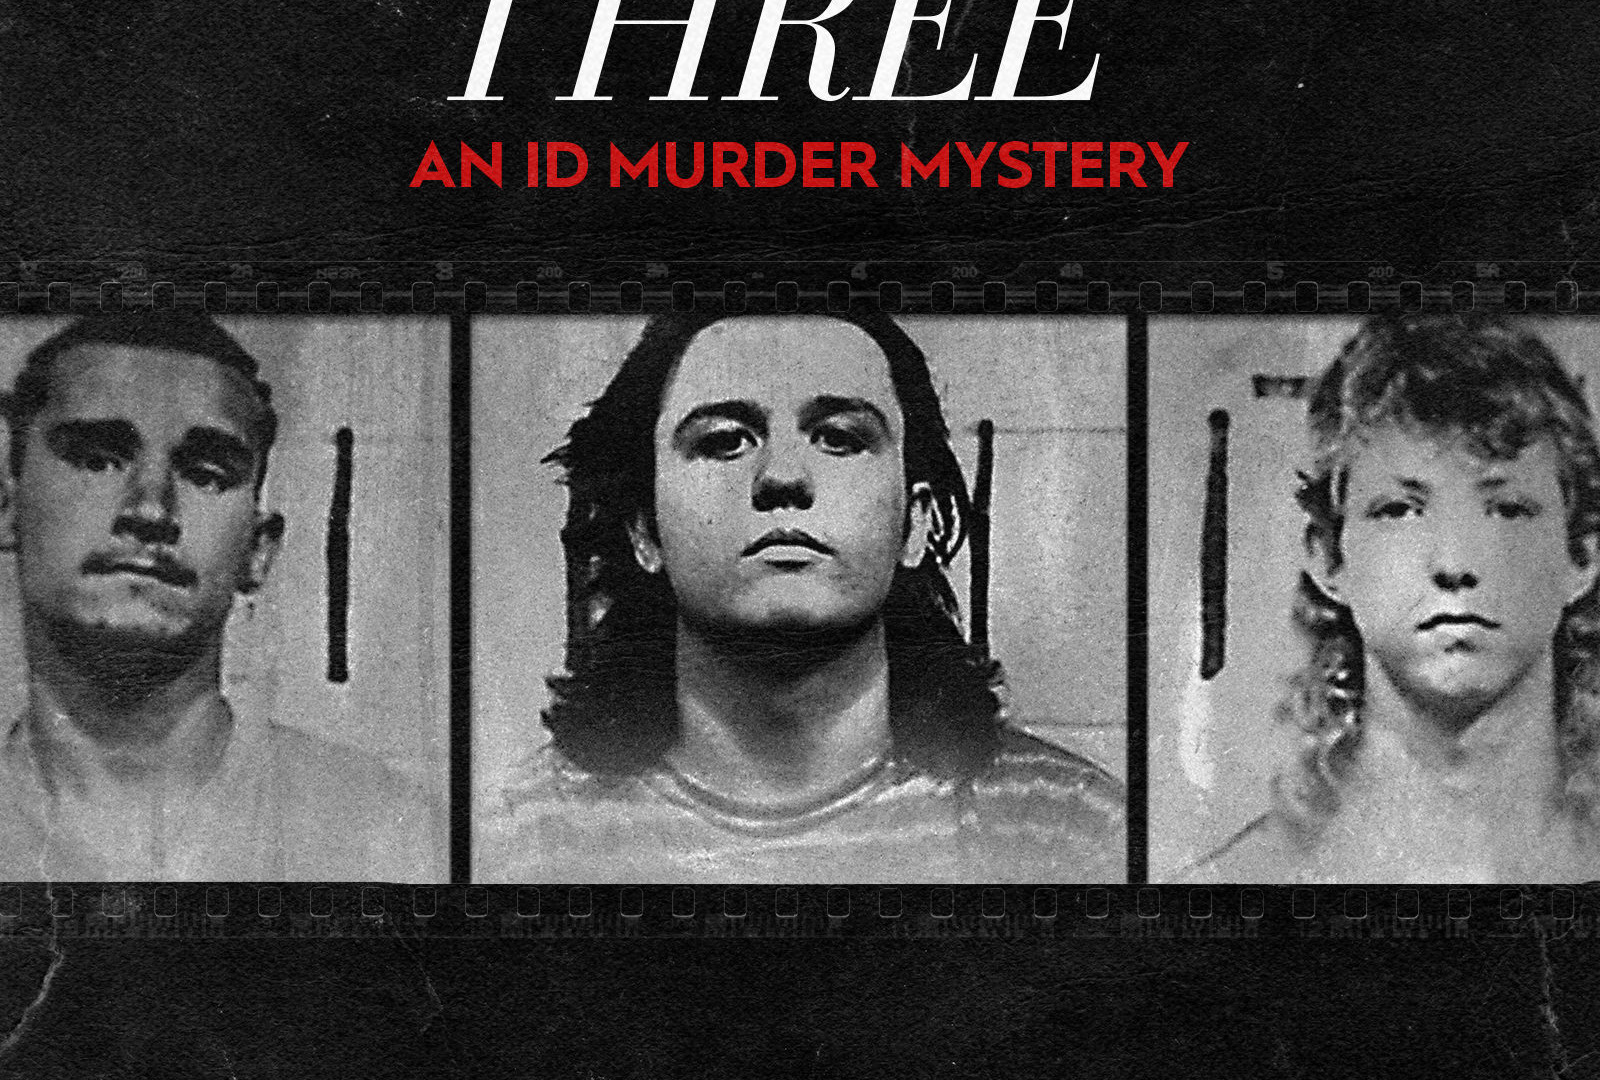 Show The West Memphis Three: An ID Murder Mystery